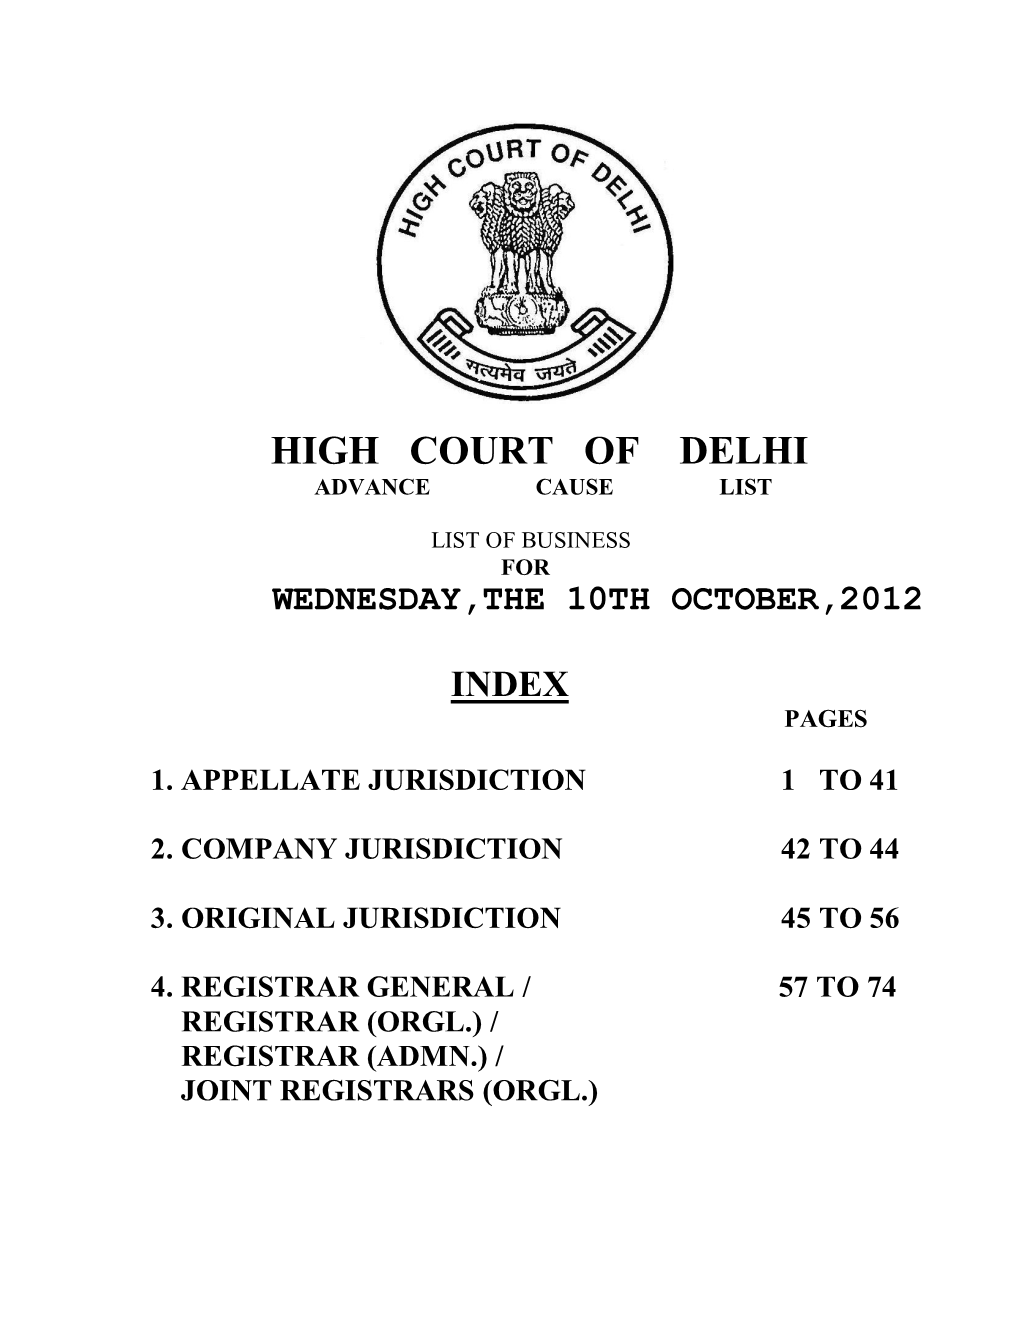 High Court of Delhi Advance Cause List